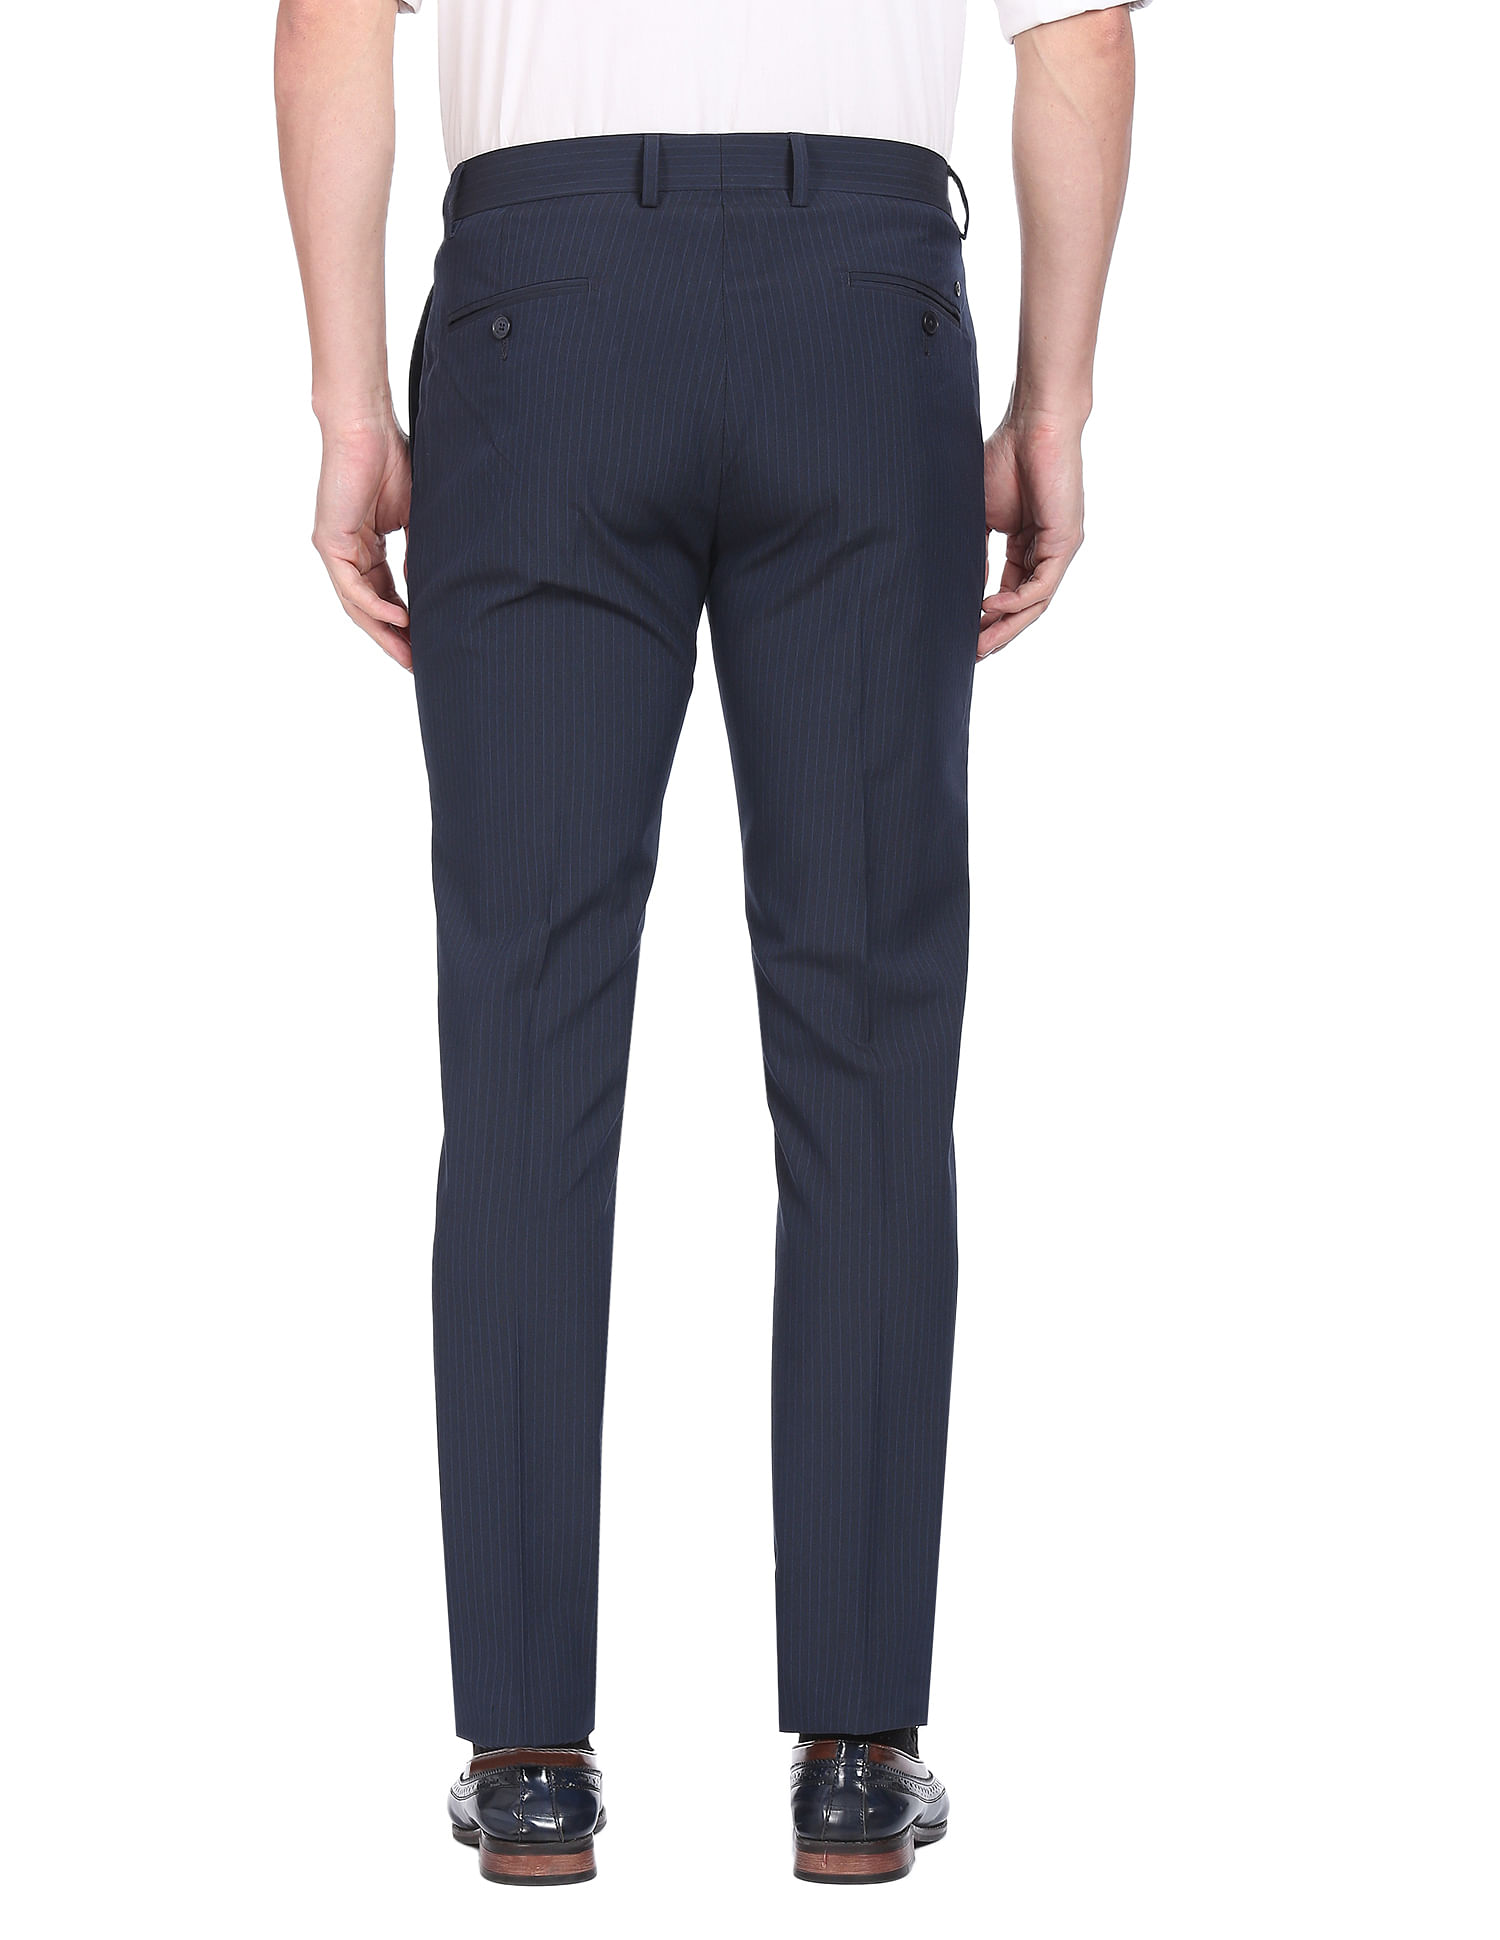 SKA Nepalese Vertical Striped PE Pants Trousers- Grey Blue - SKA Clothing